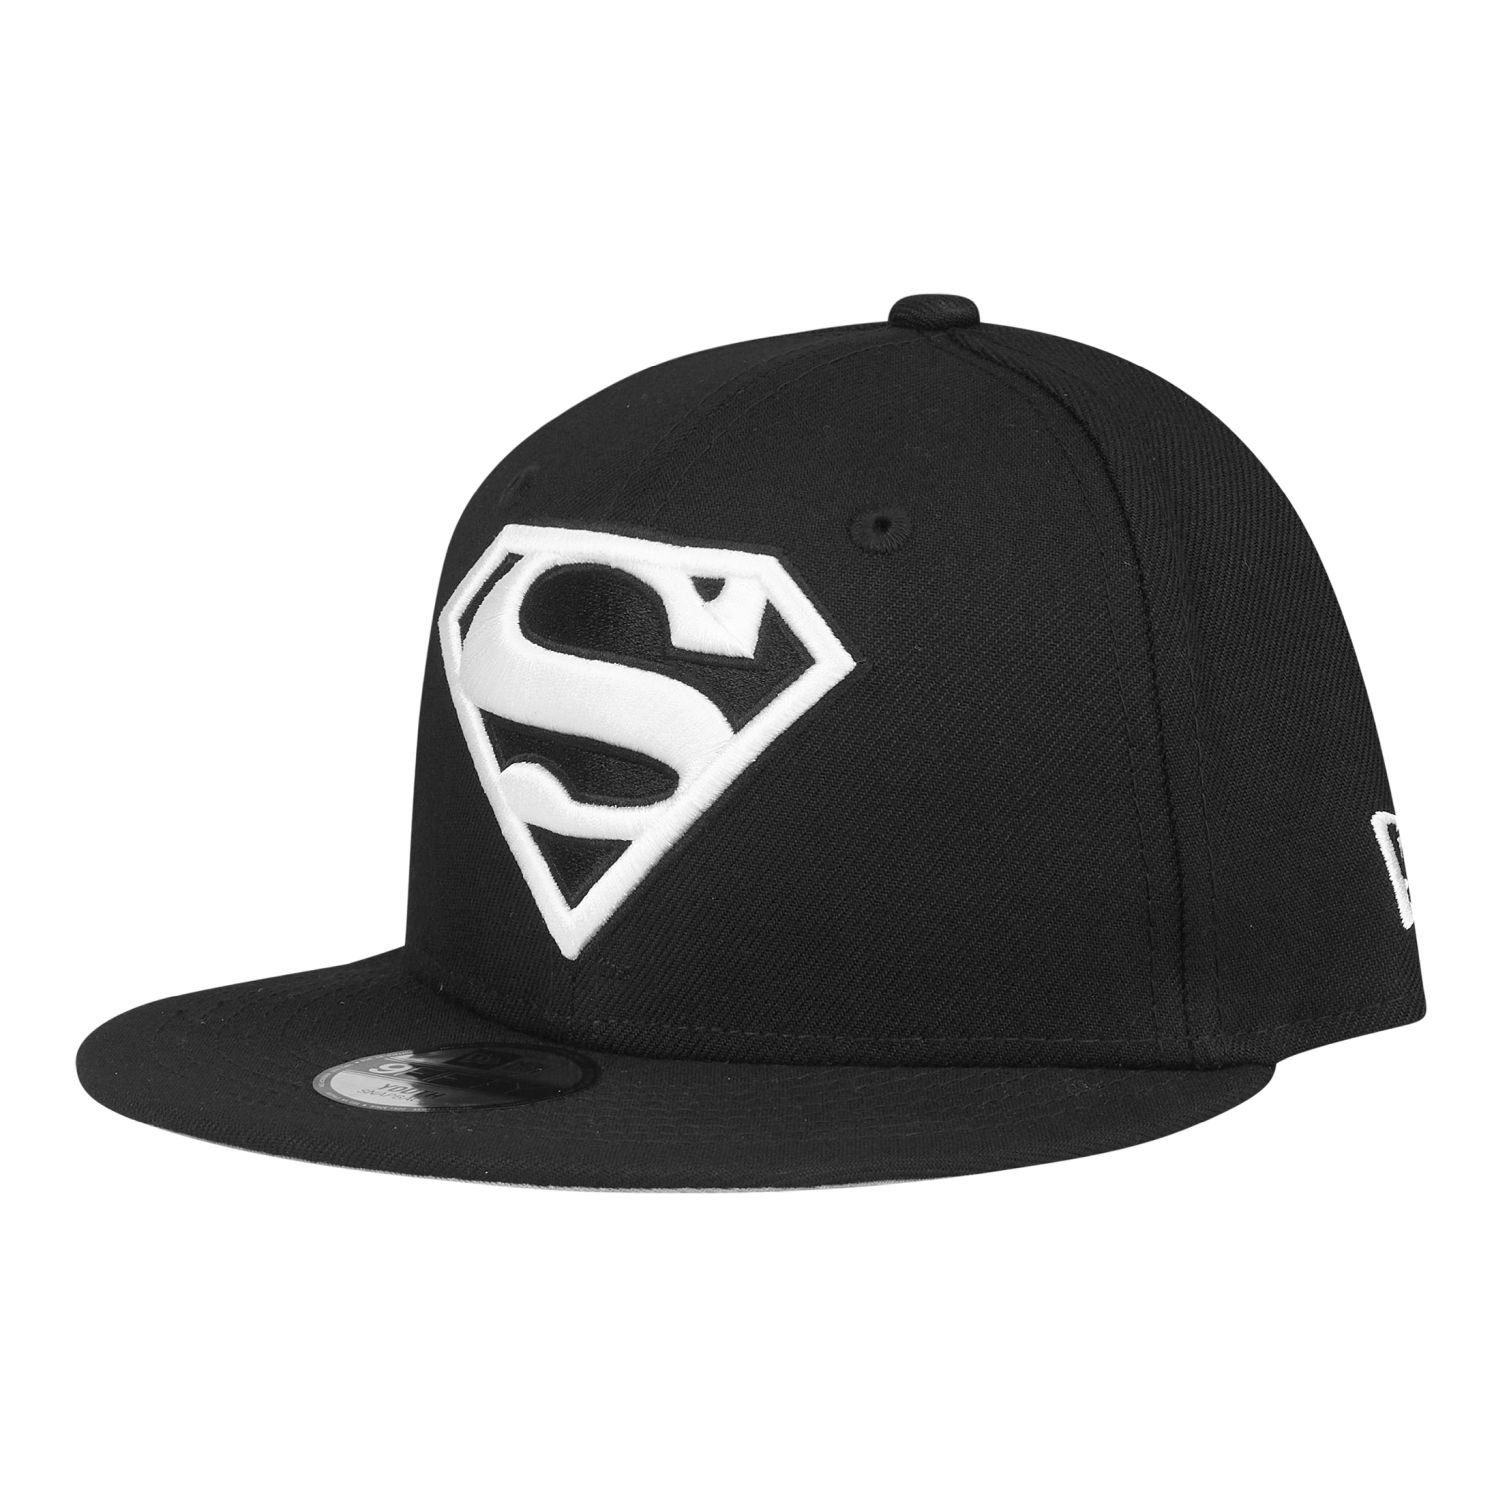 Superman Era New Baseball Cap 9Fifty